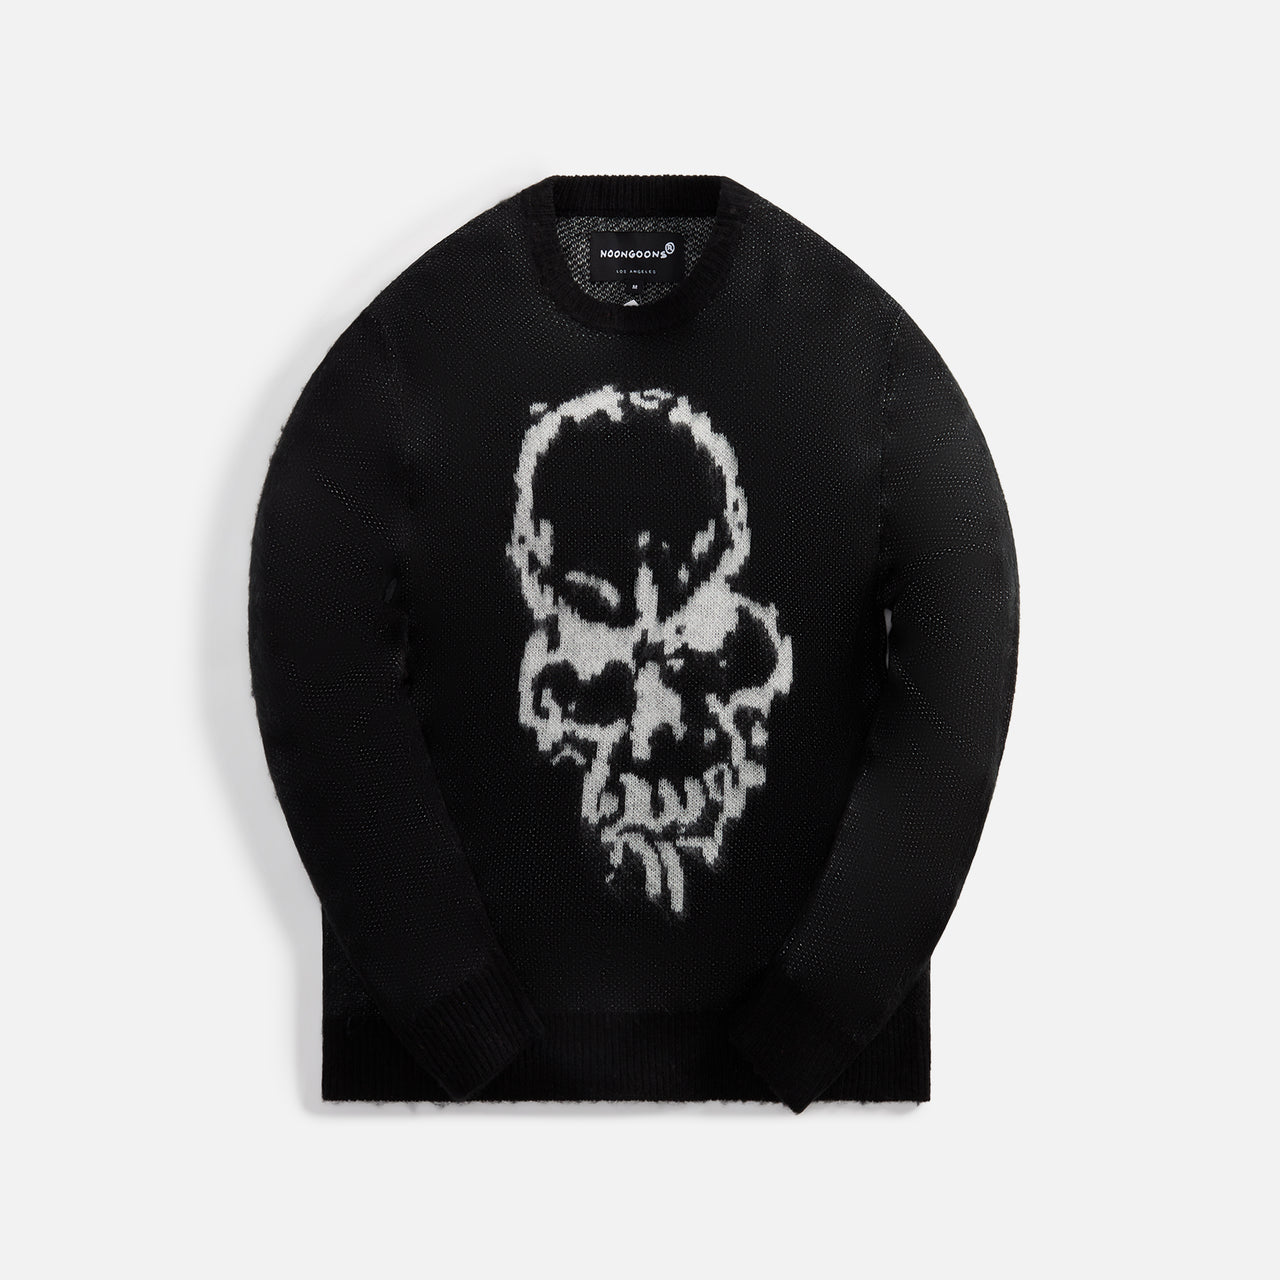 Noon Goons Gatekeeper Sweater - Black – Kith